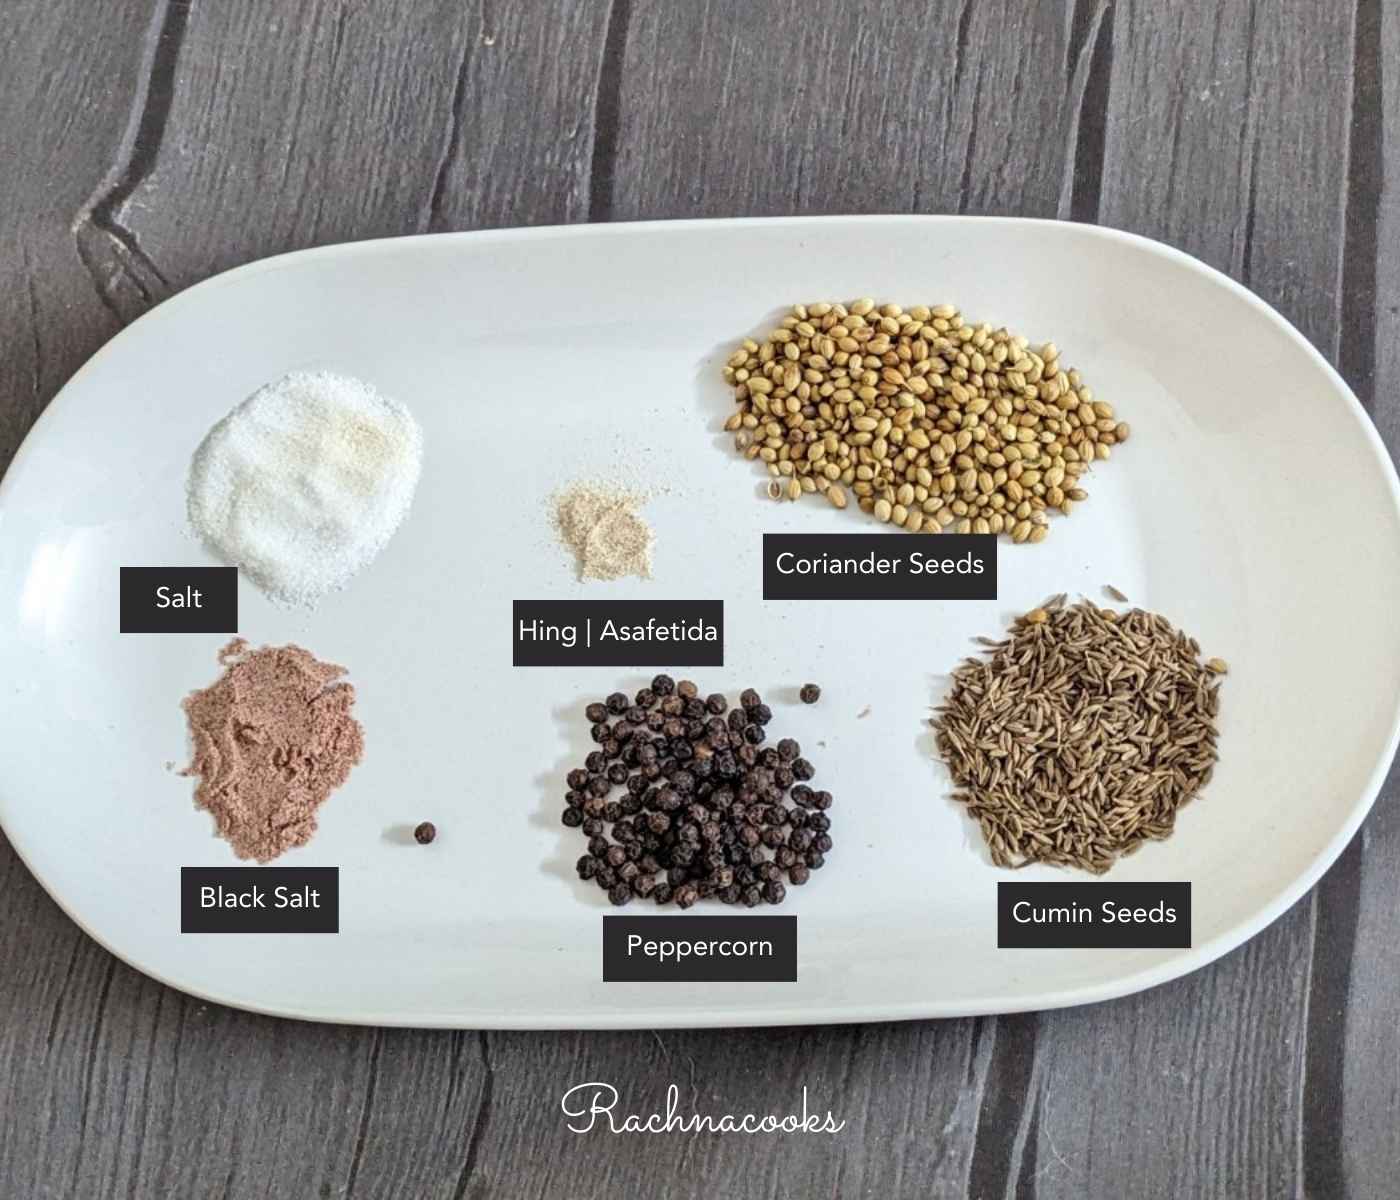 Ingredients for chaat masala in a plate. Includes cumin seeds, coriander seeds, hing, peppercorn, black salt, salt and amchur powder.